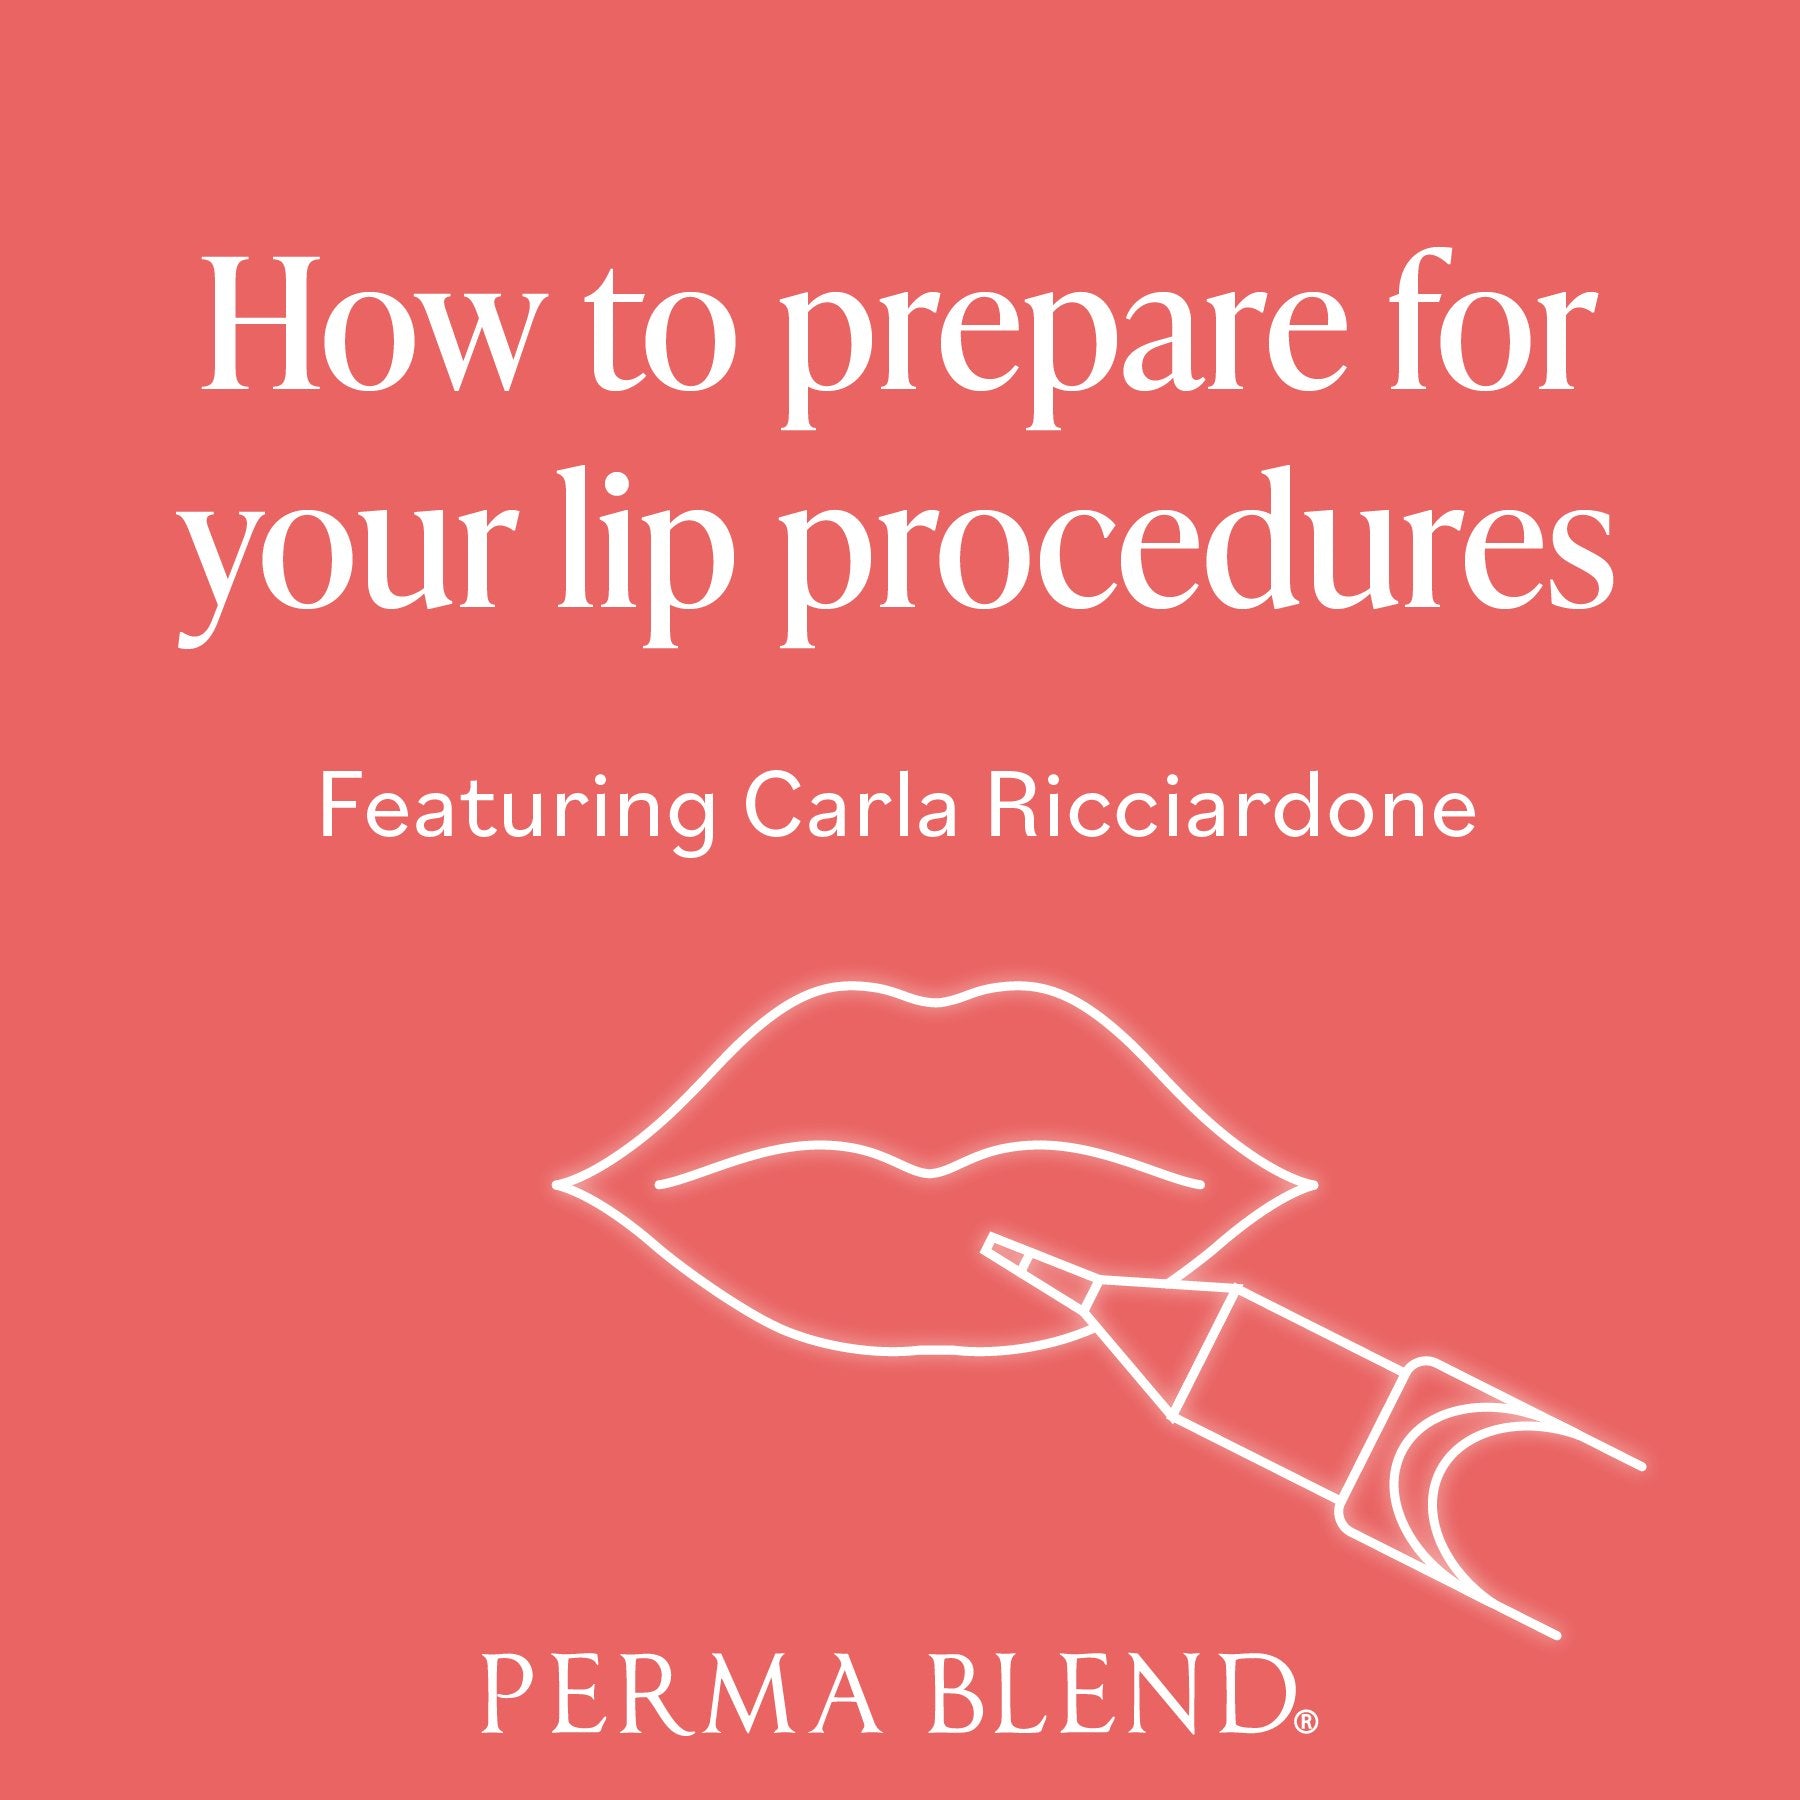 How to Prepare for Your Lip Procedures - Featuring Carla Ricciardone